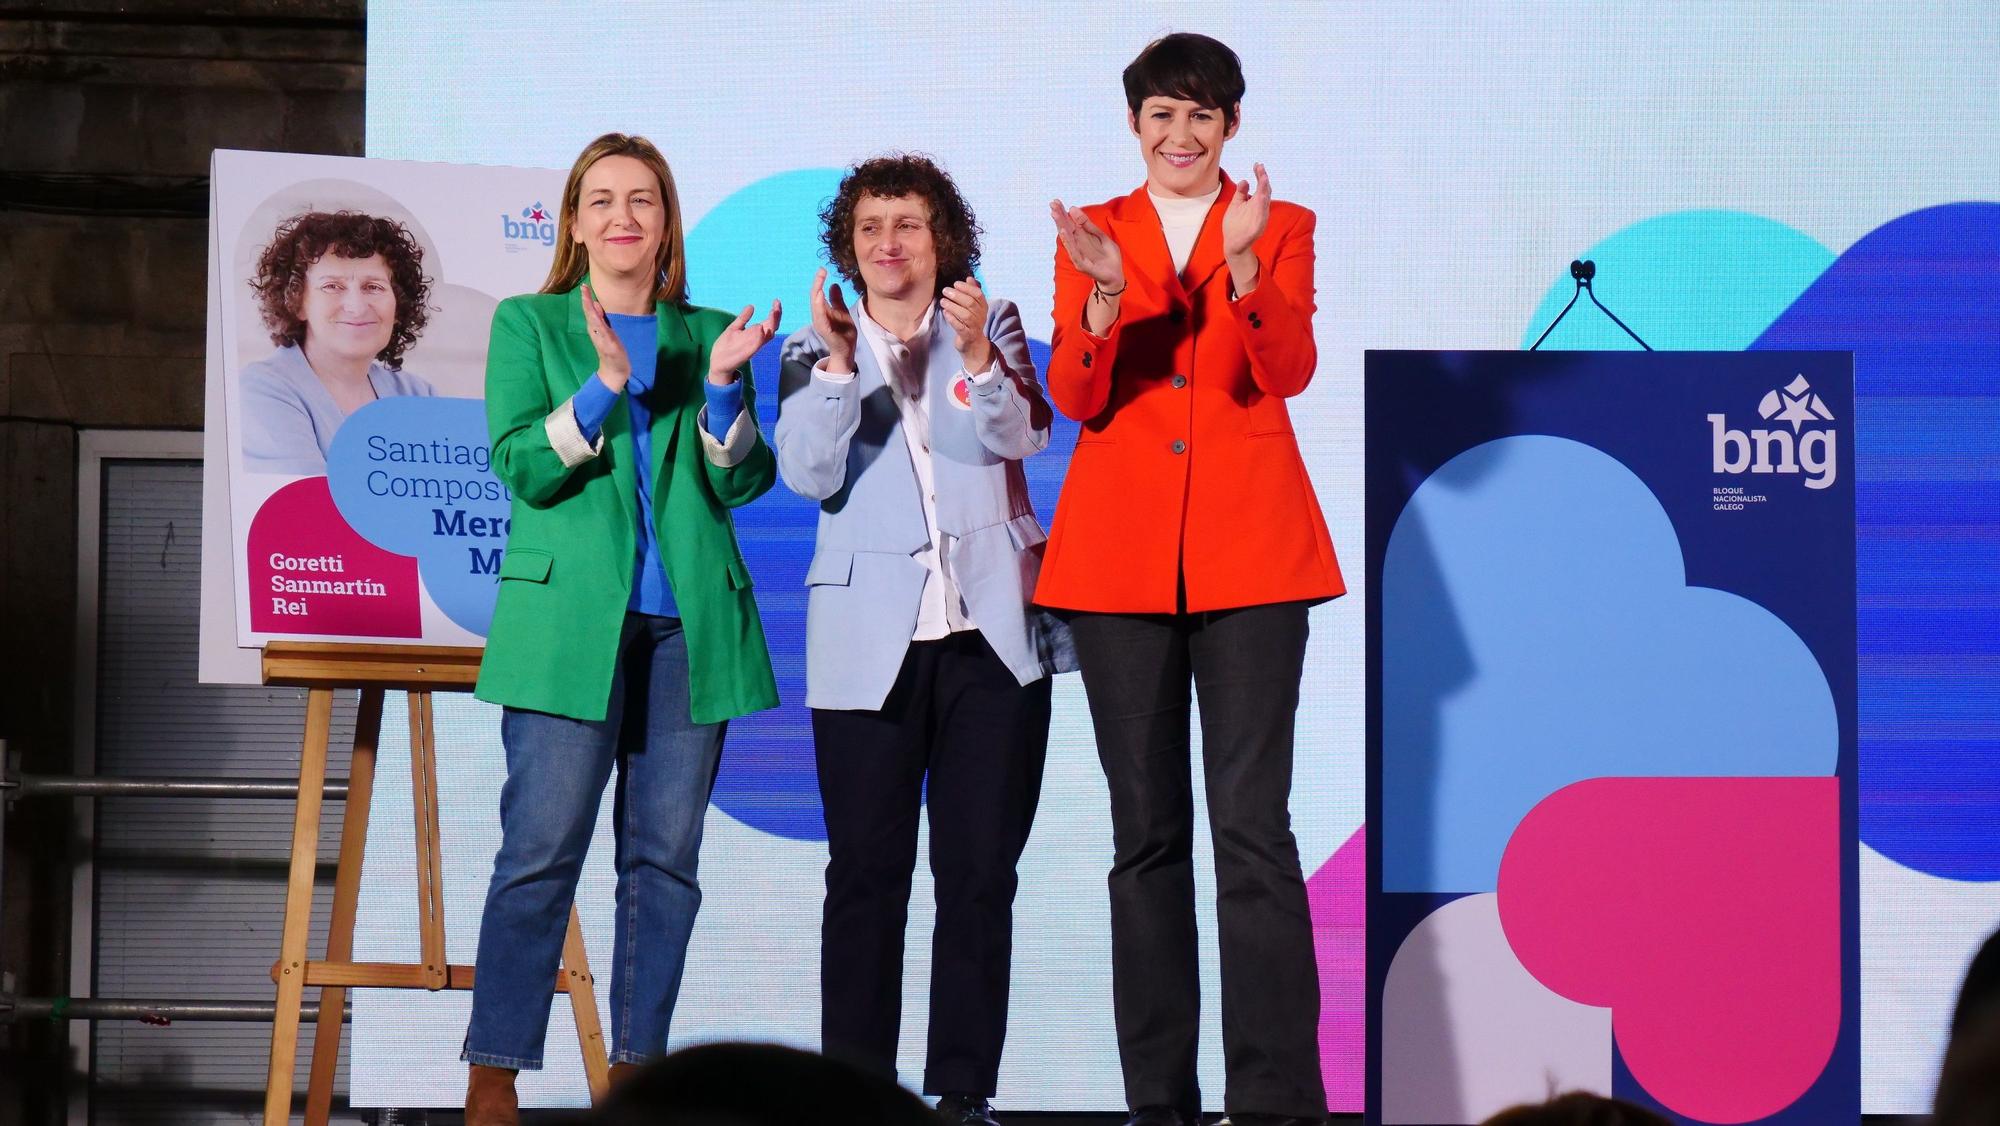 Goretti Sanmarttin, condidata a la alcaldía de Santiago, junto a Ana Pontón, líder del BNG autonómico, y Miriam Louzao, segunda na lista do BNG